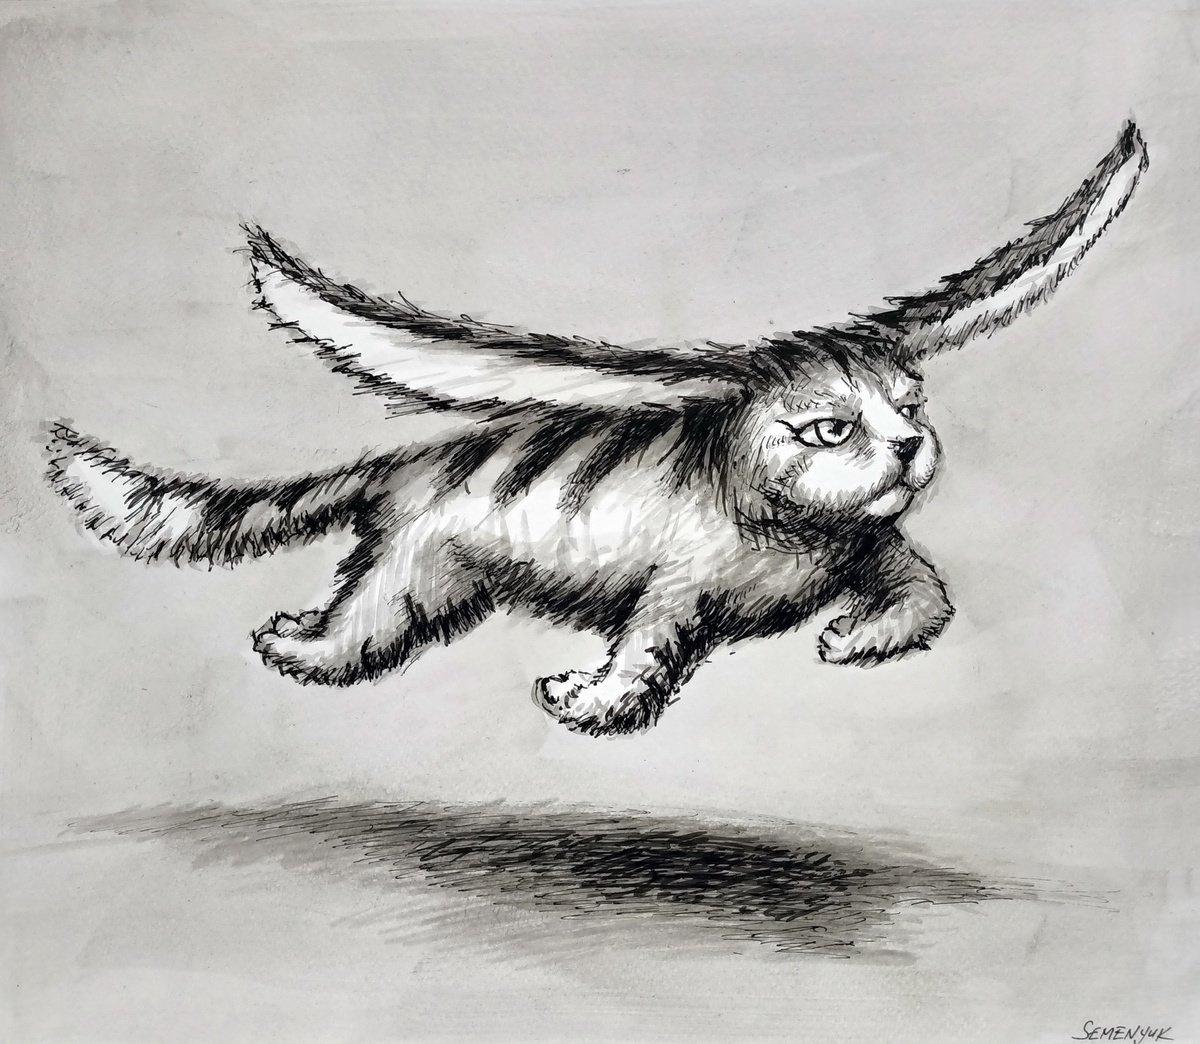 Flying Cat 2 by Evgen Semenyuk